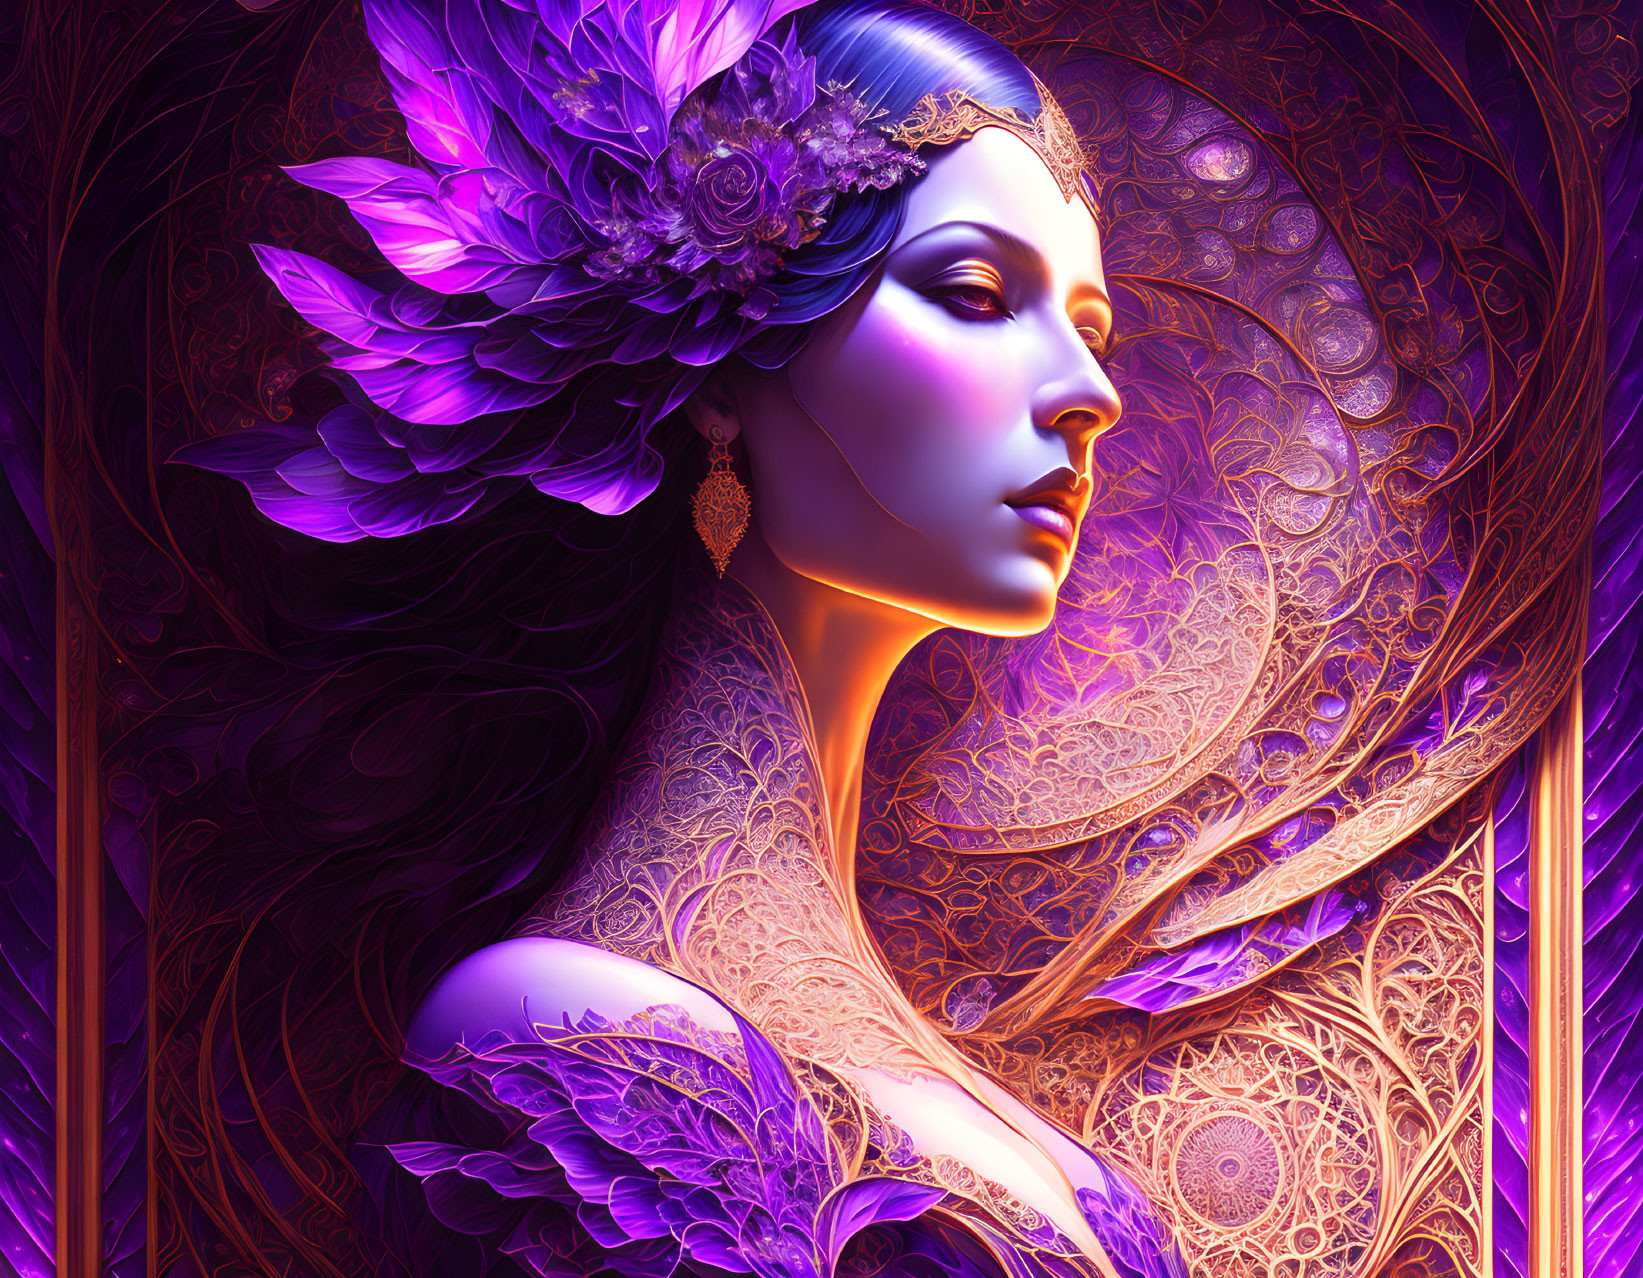 Vibrant female figure with purple headdress and mandala patterns